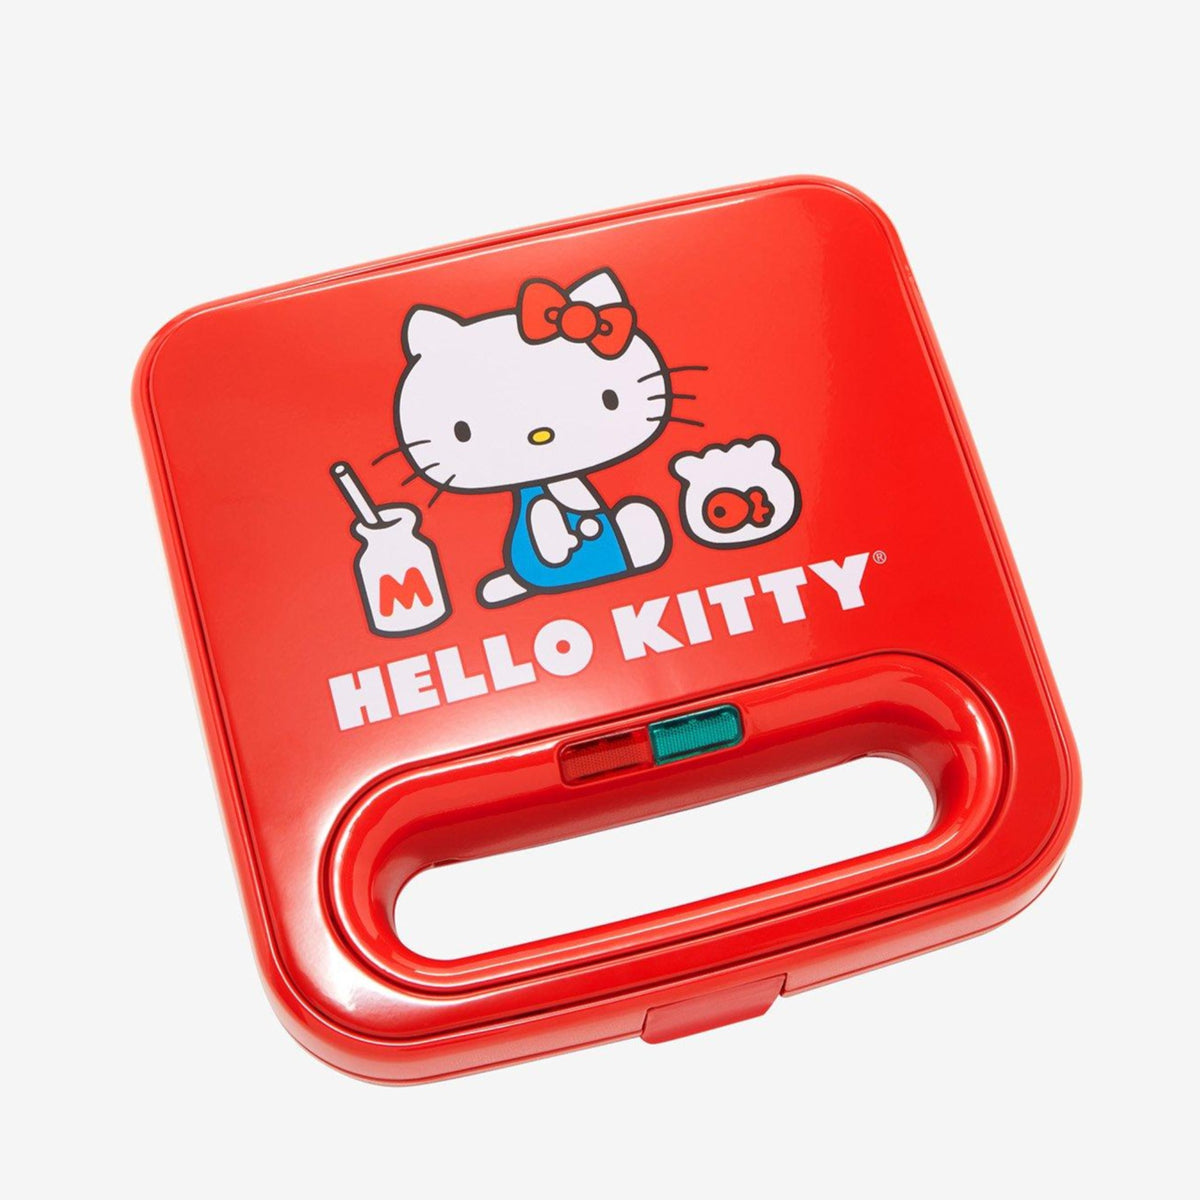 Hello Kitty Classic Sandwich Maker Home Goods Uncanny Brands LLC   